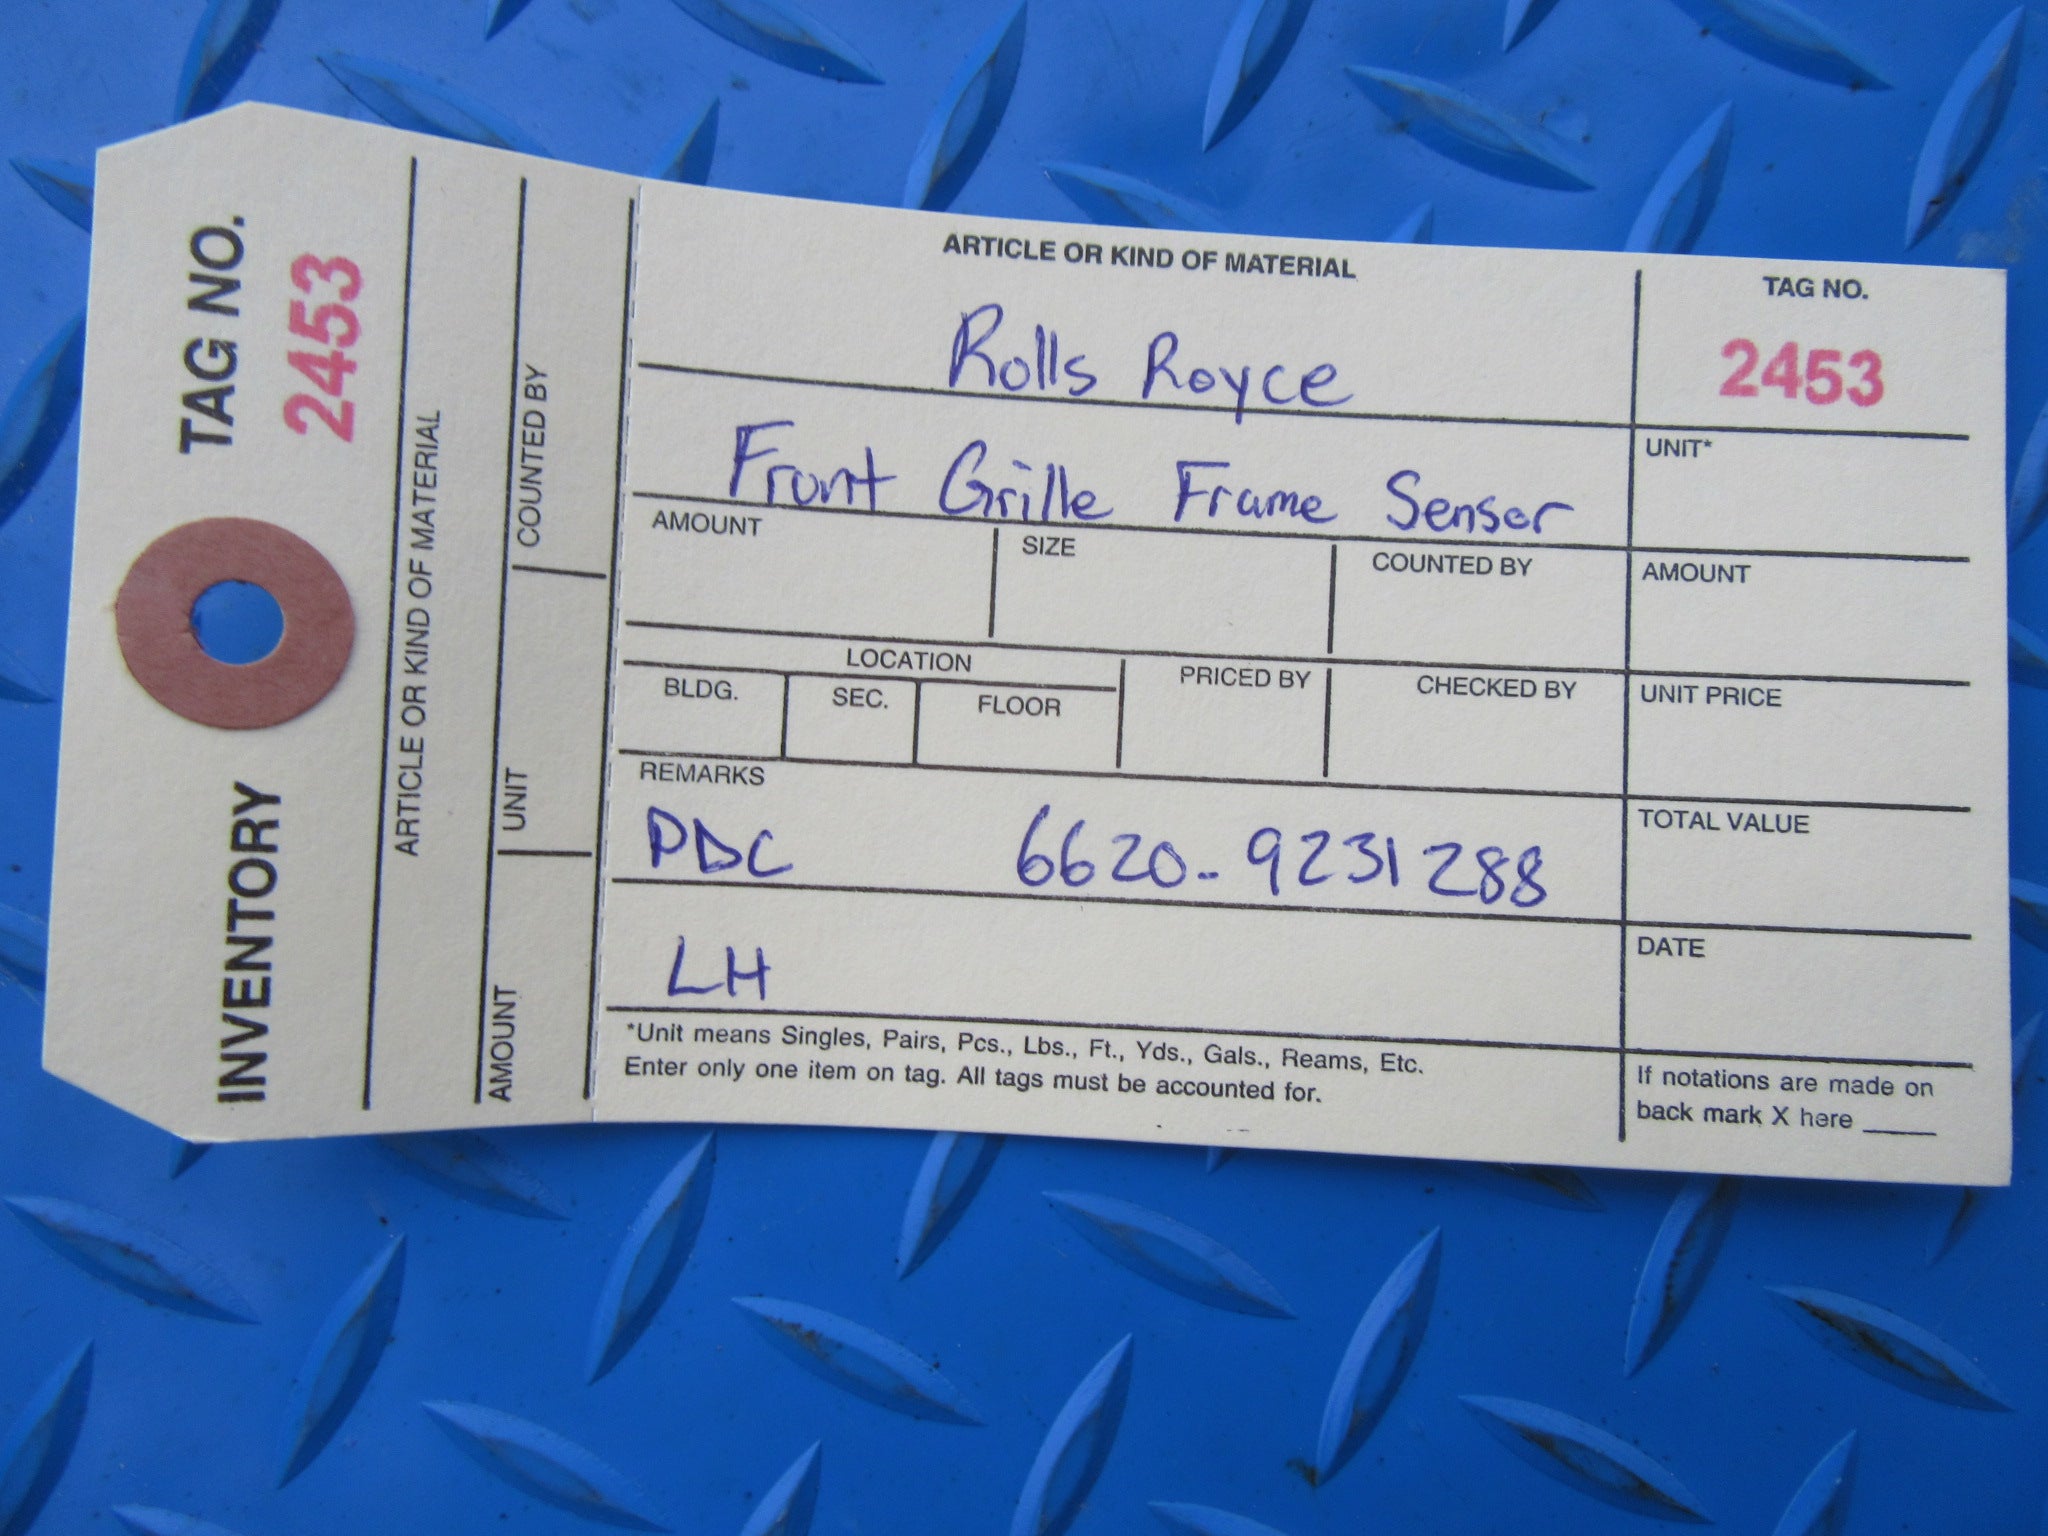 Rolls Royce Ghost front grille frame cover PDC parking sensor #2453